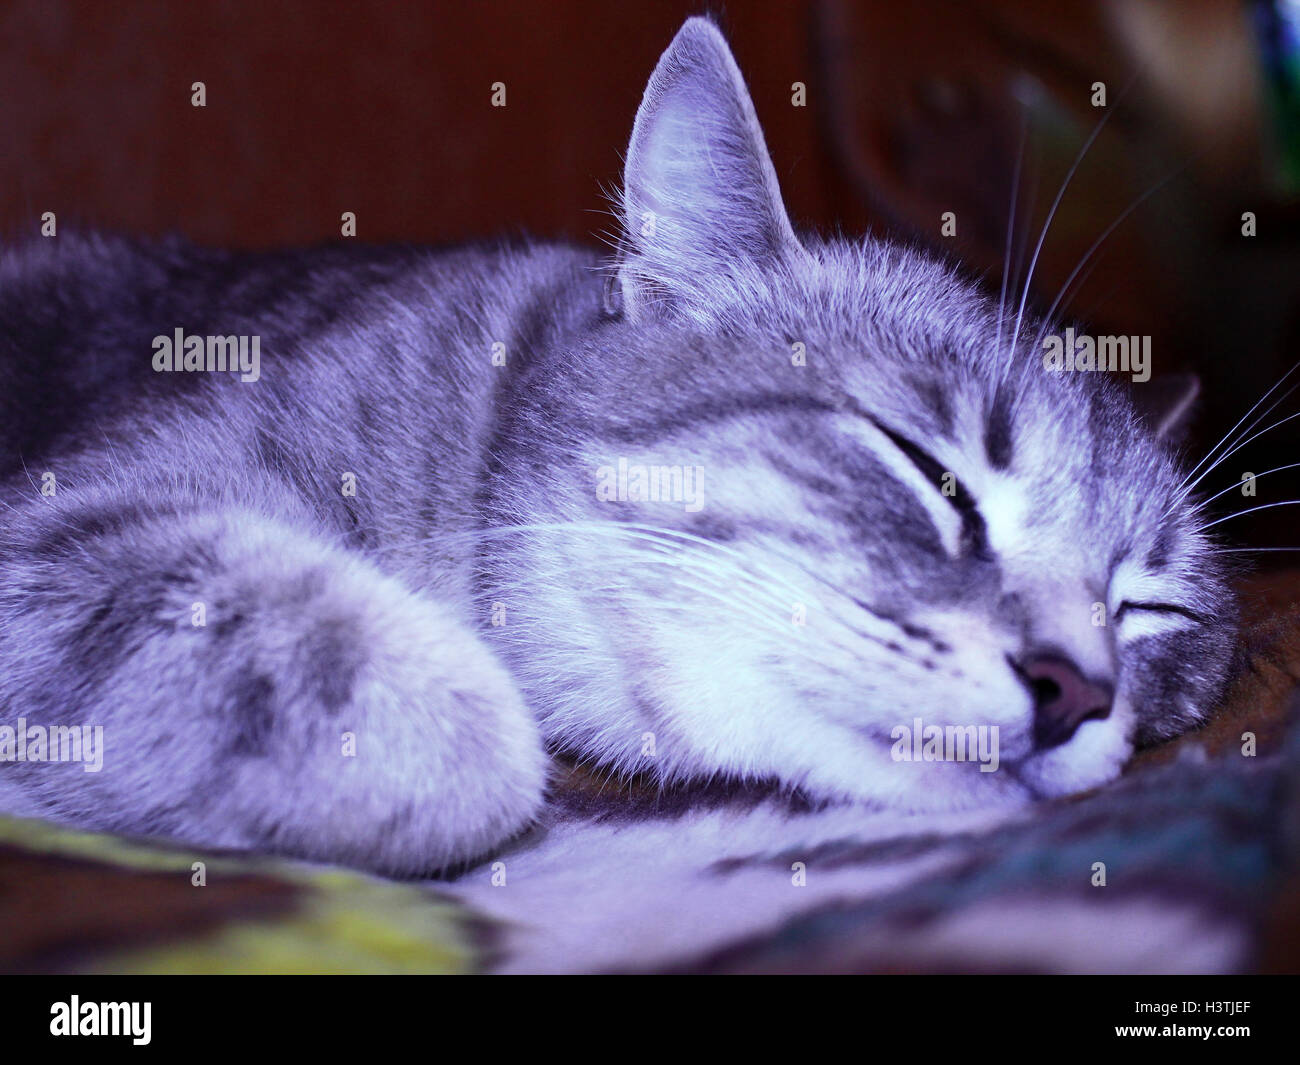 macro of sleeping cat of Scottish Straight breed Stock Photo